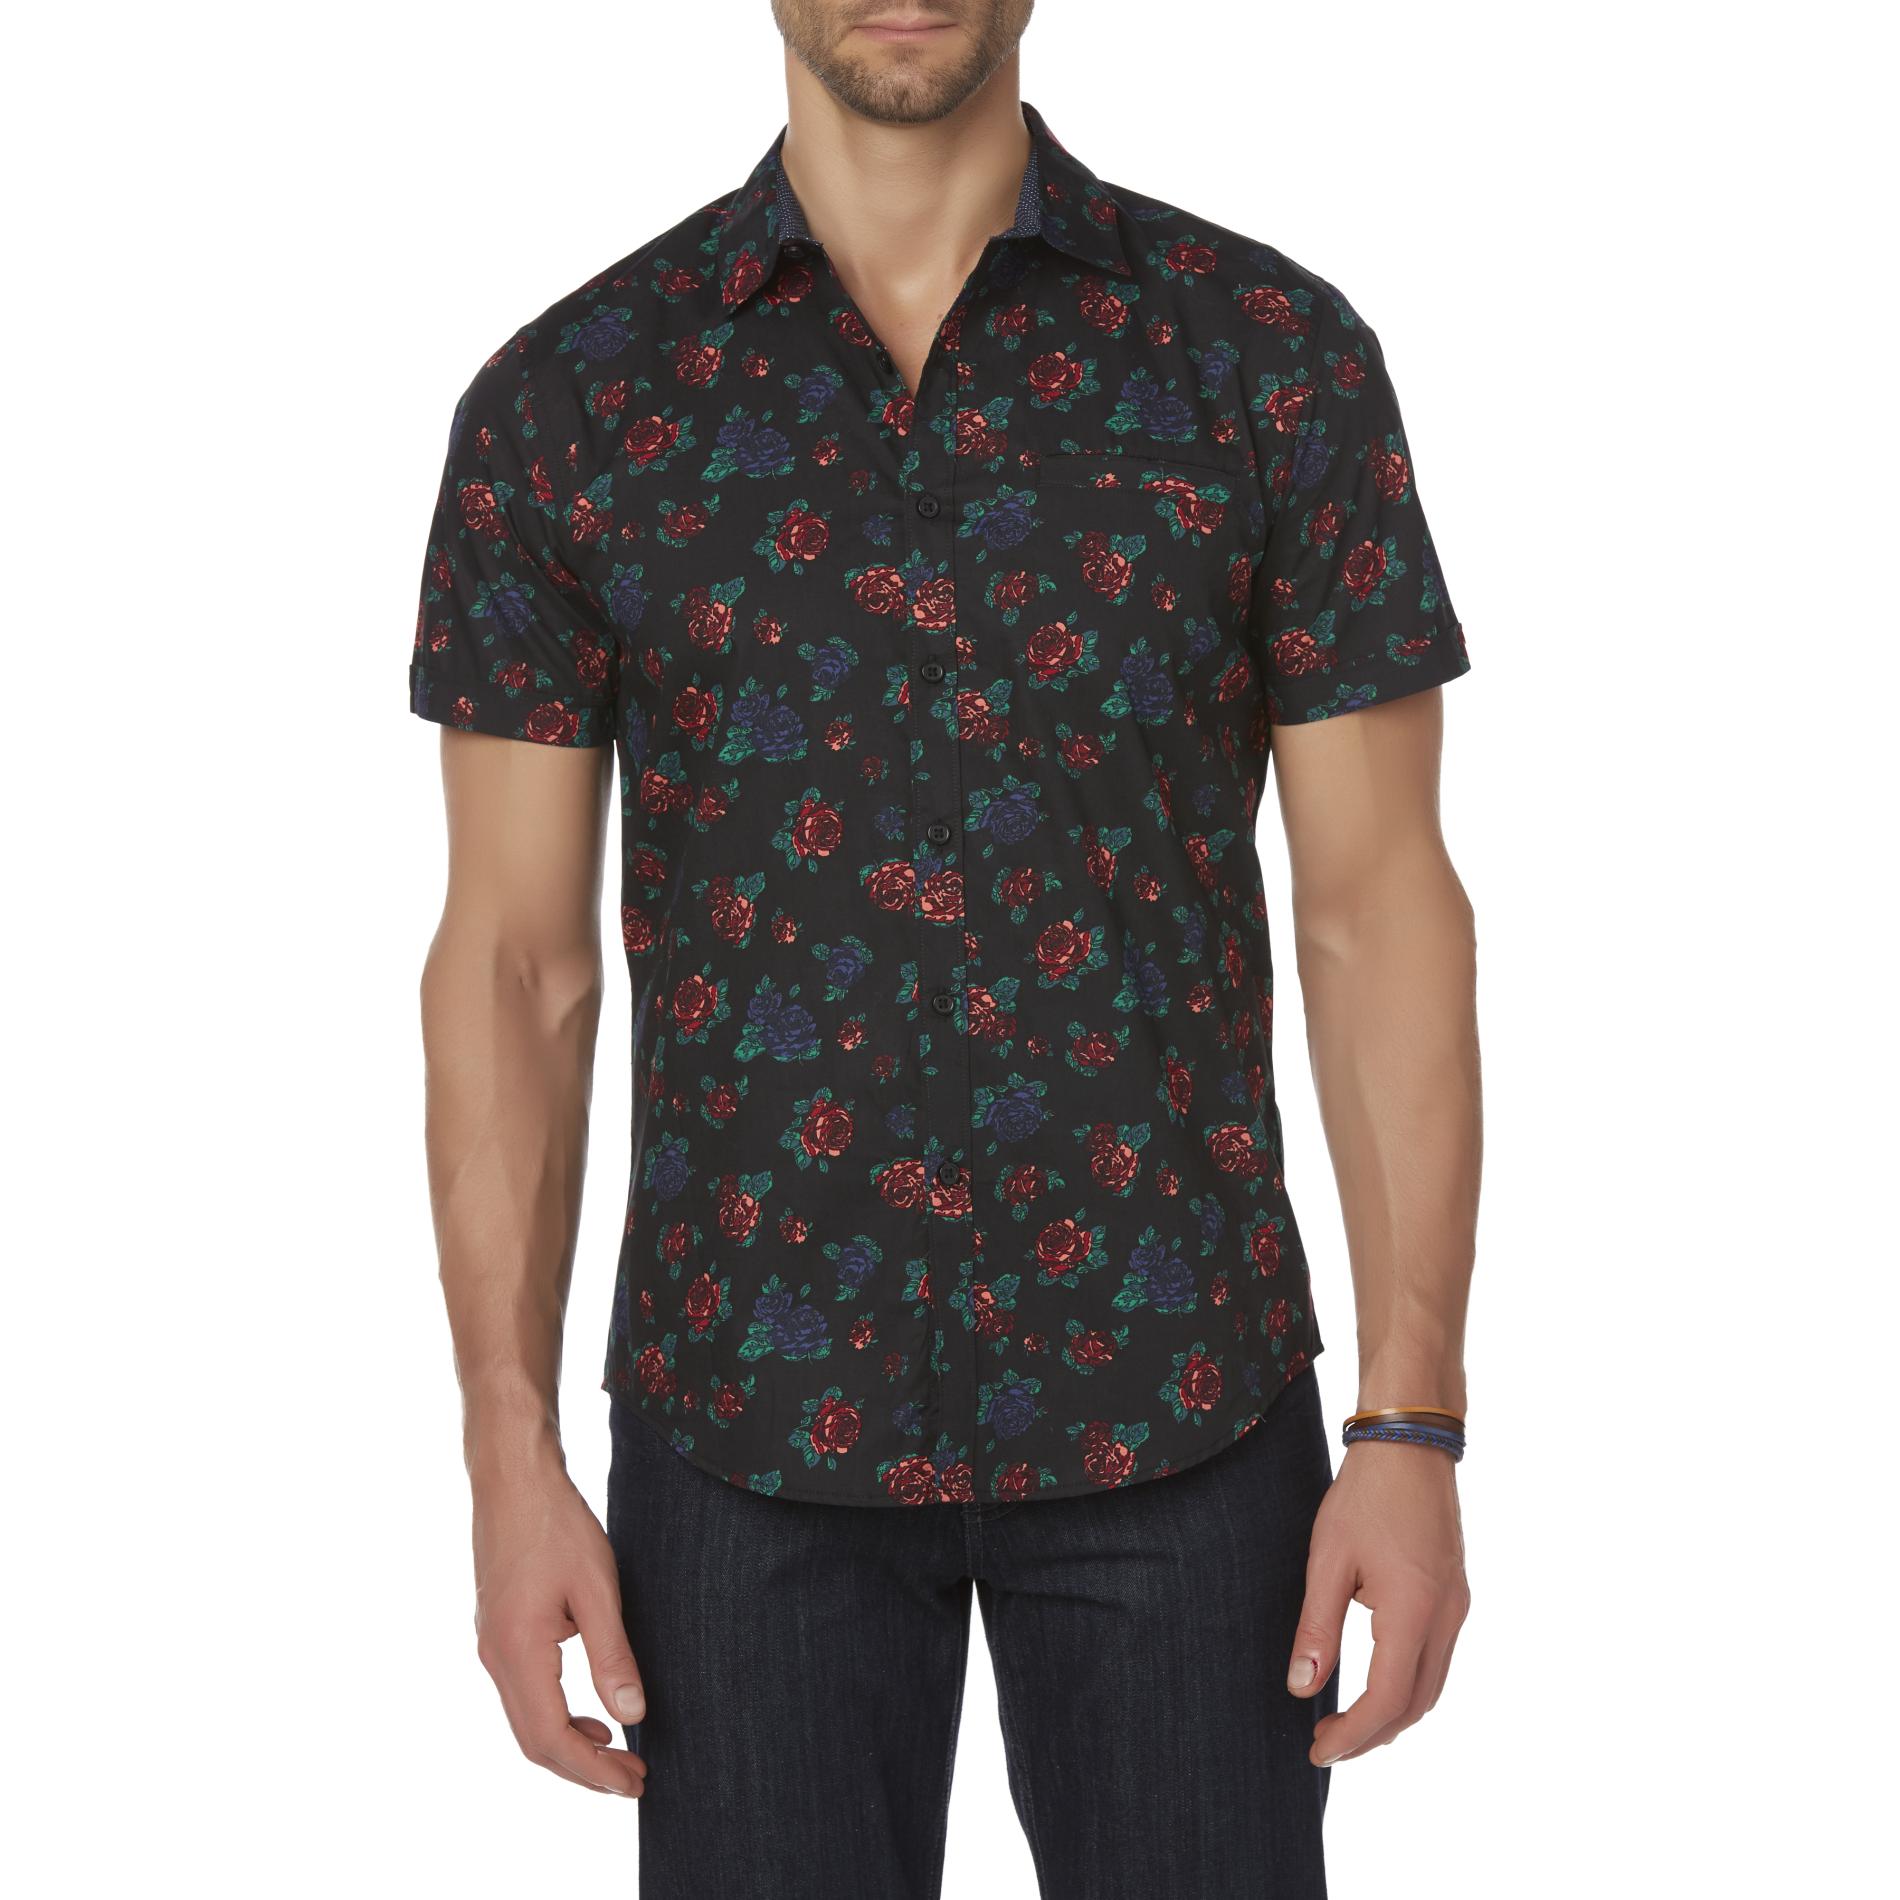 Structure Men's Short-Sleeve Button-Front Shirt - Floral